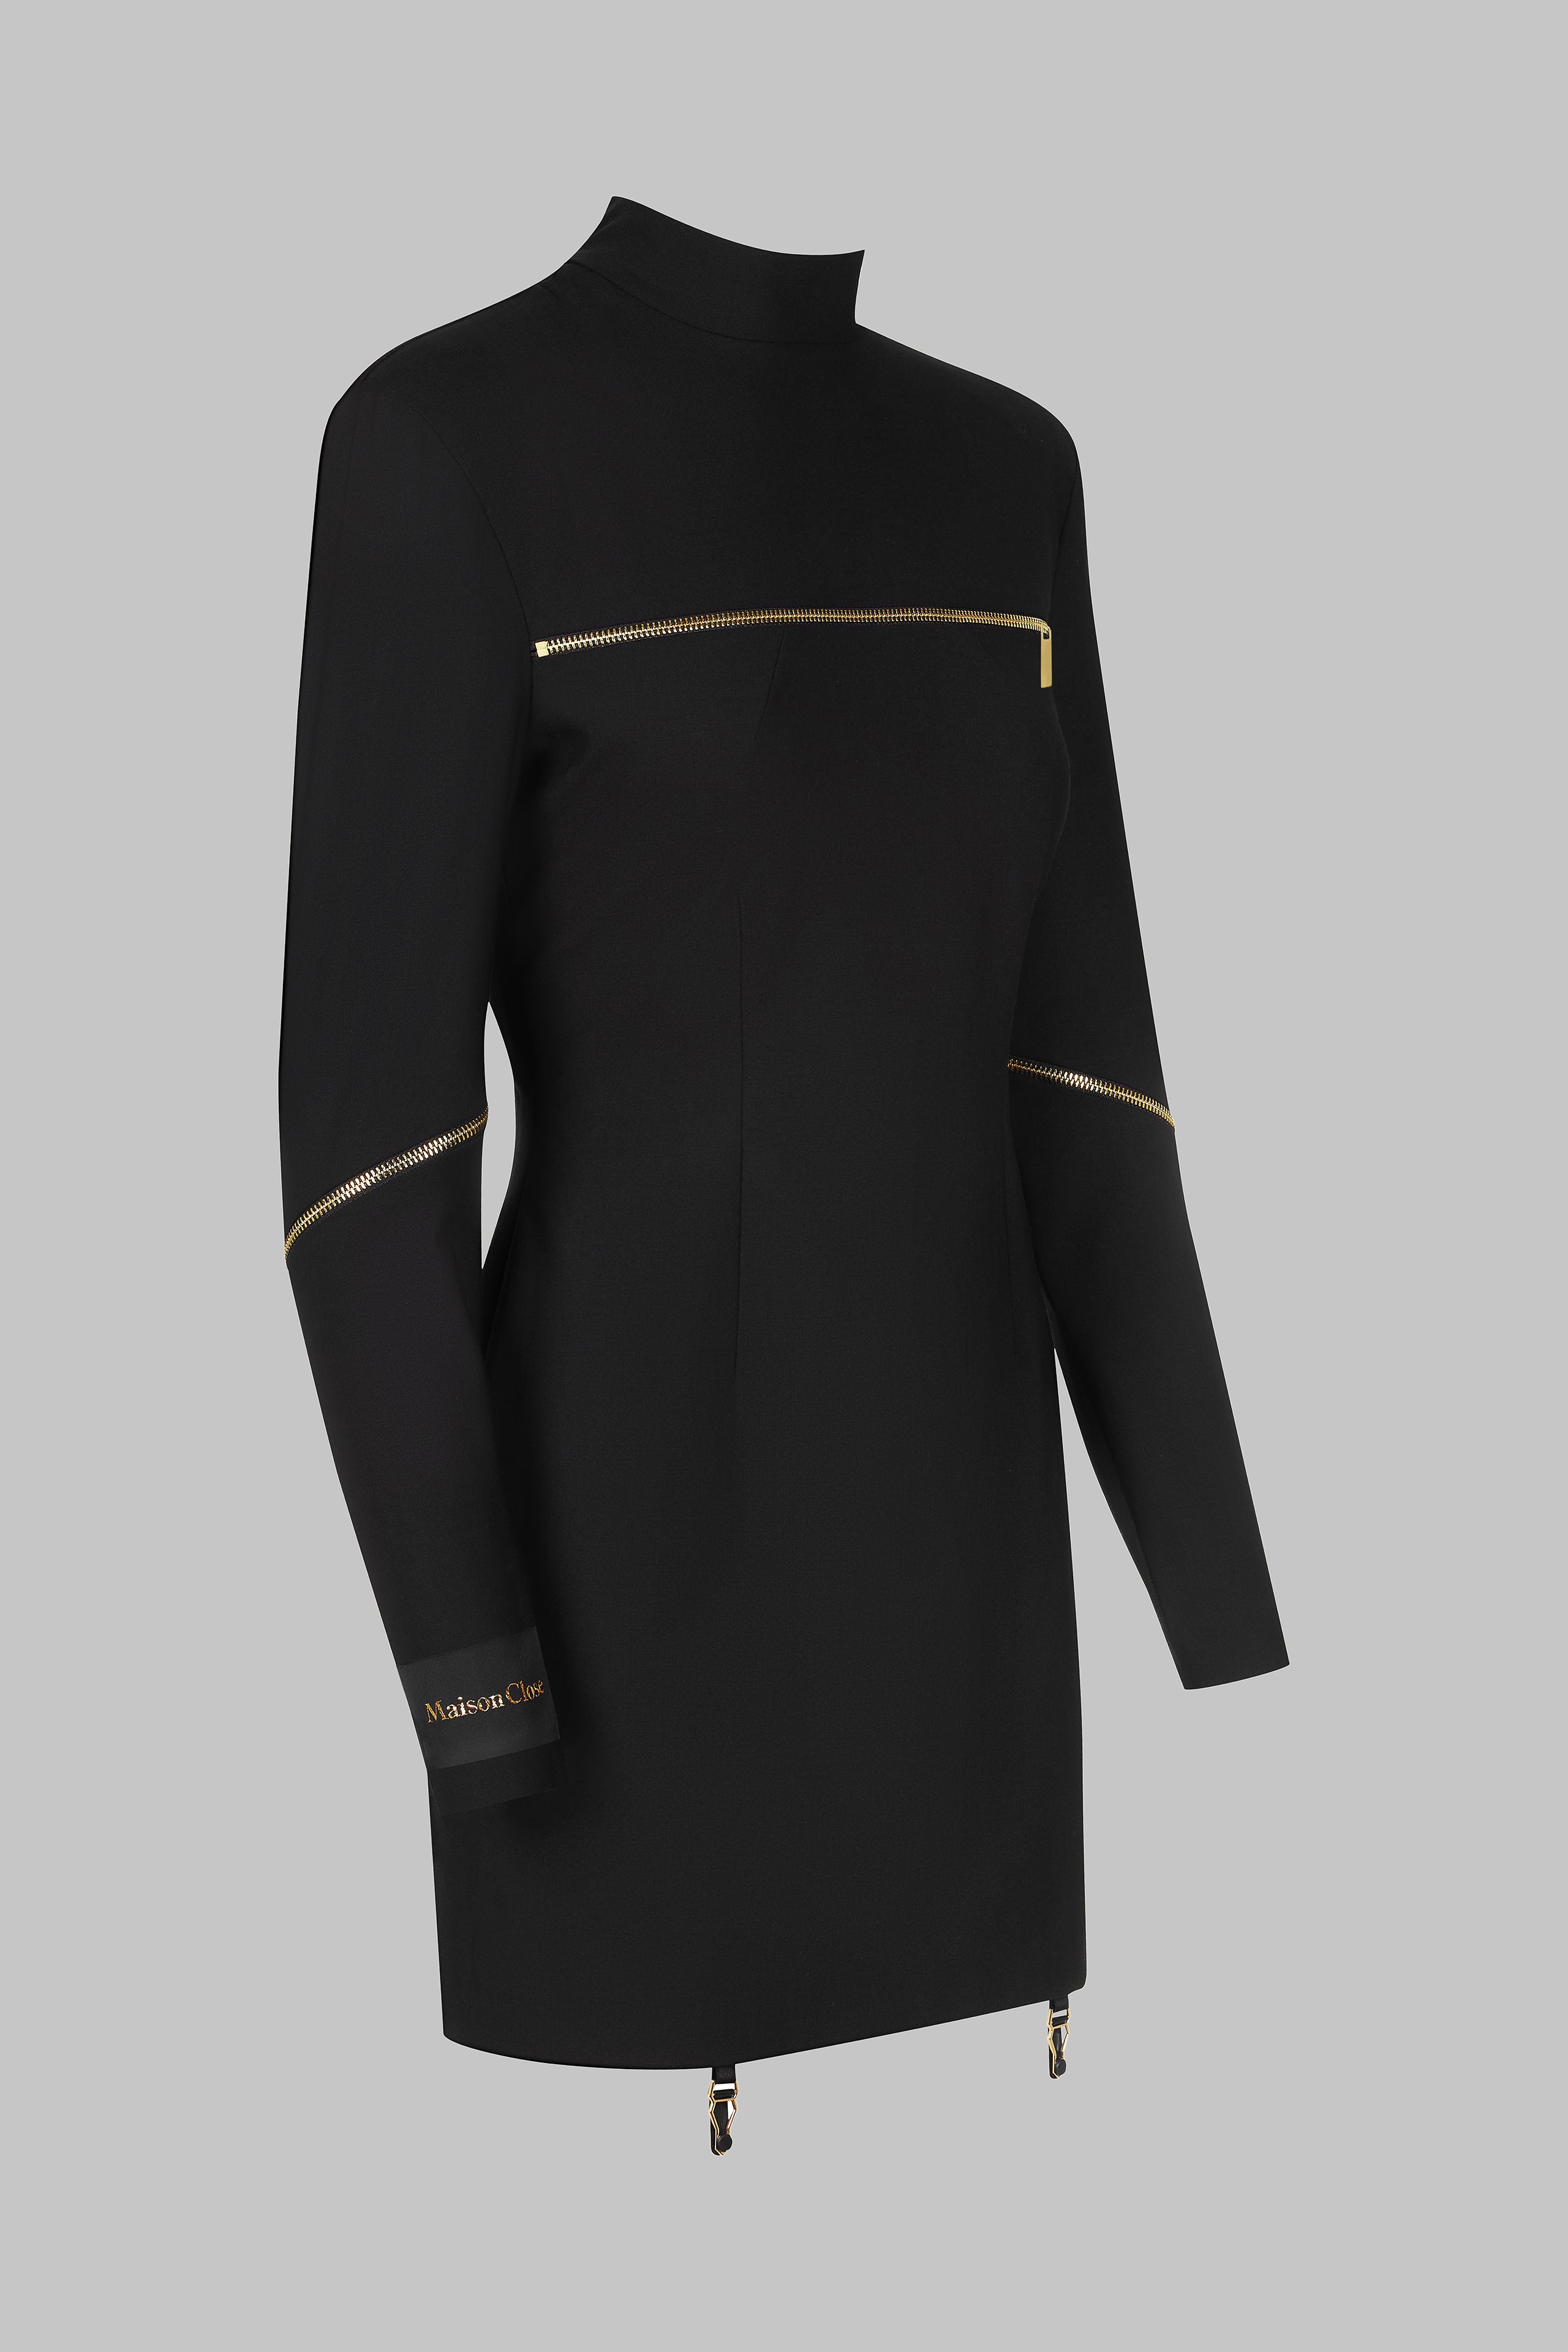 018 - Wool short dress with zip